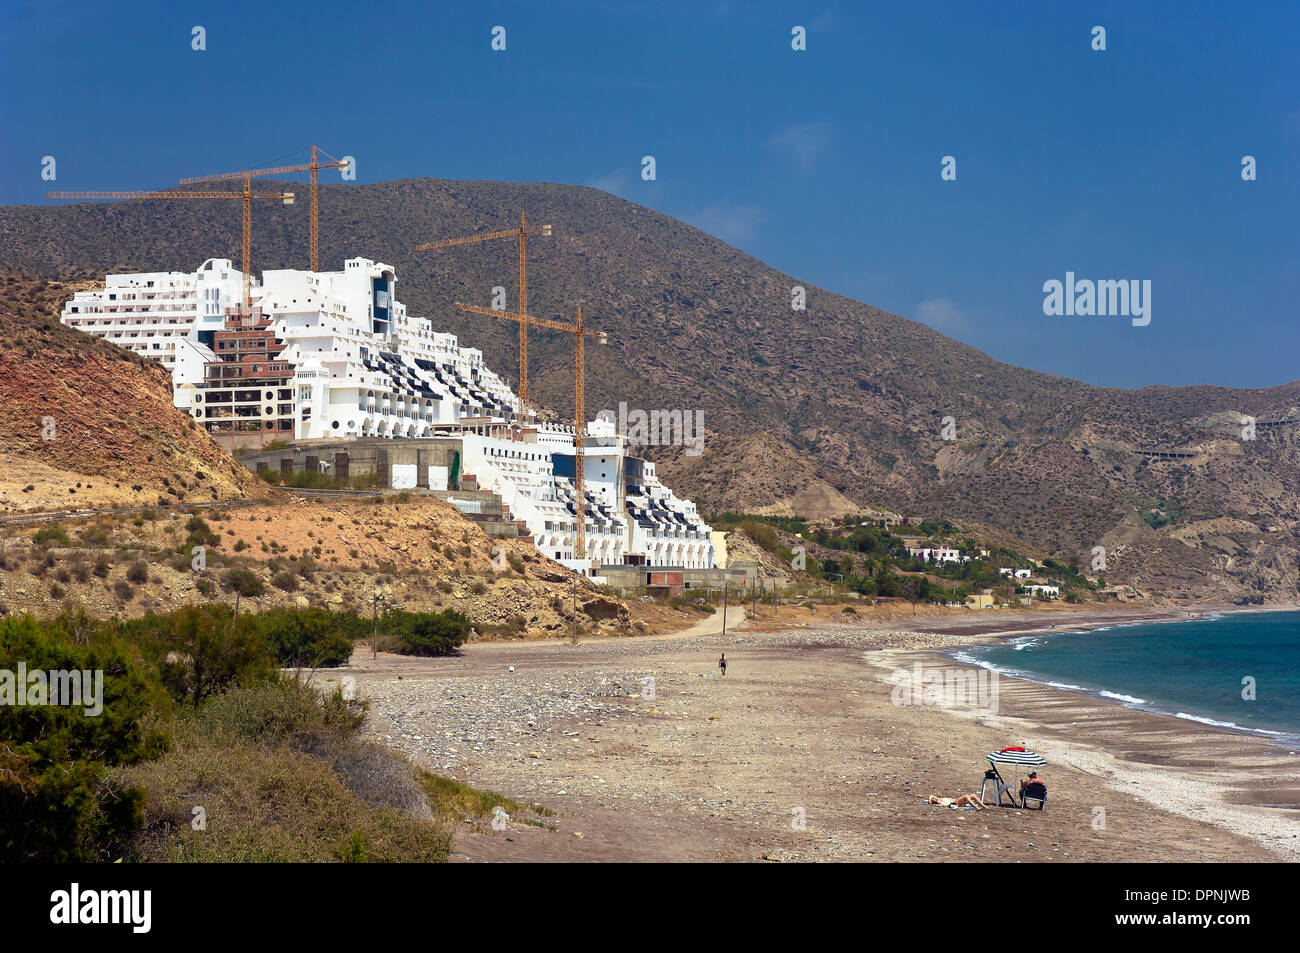 El Algarrobico hotel and beach, Carboneras, Almeria-province, Region of Andalusia, Spain, Europe Stock Photo